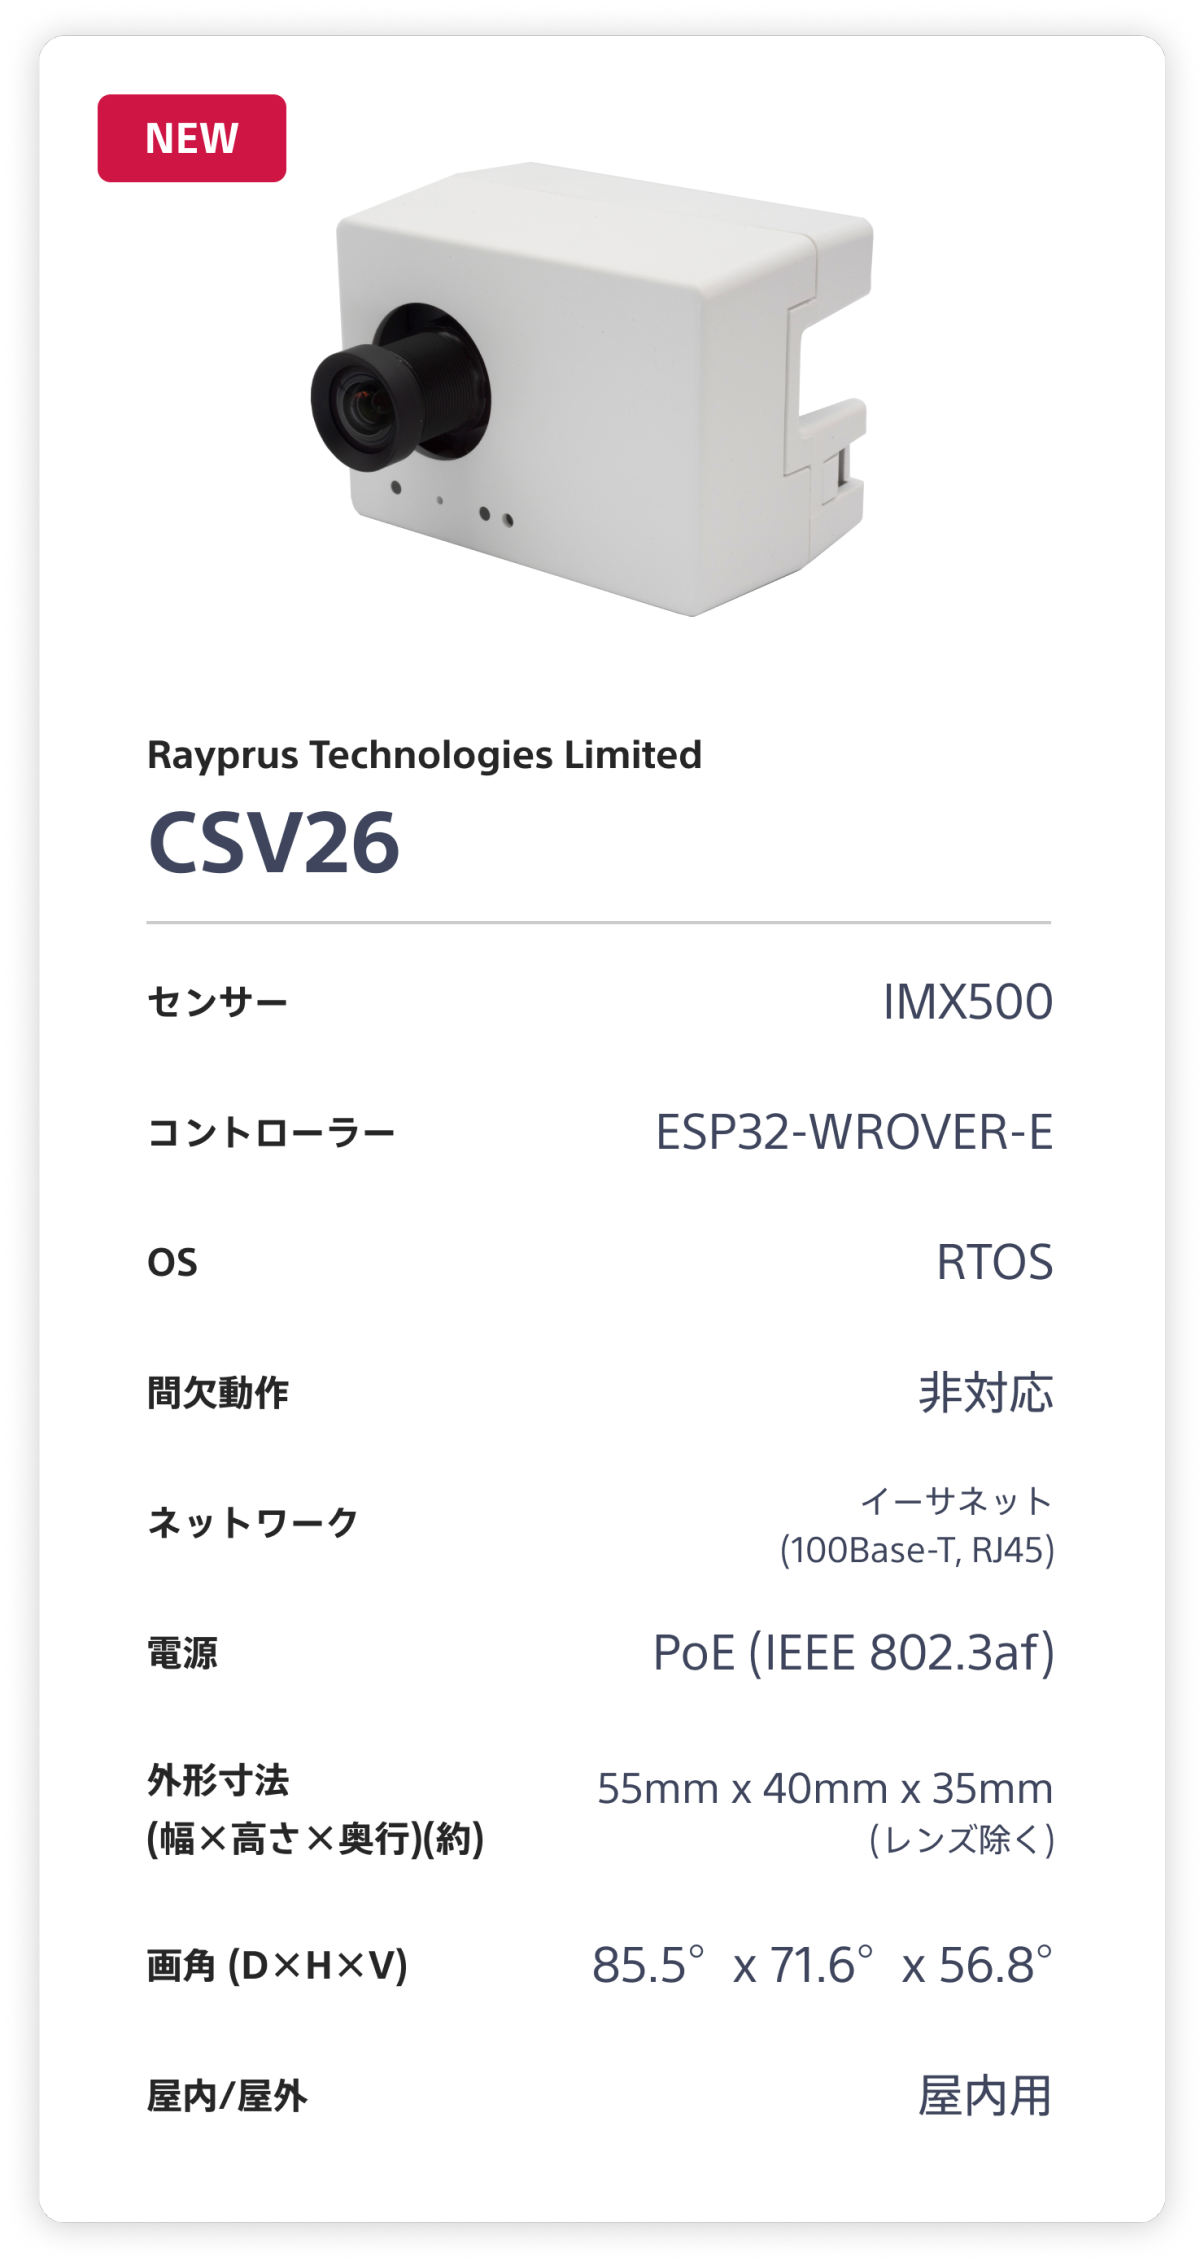 Rayprus Technologies Limited CSV26。センサー：IMX500。 コントローラー：ESP32-WROVER-E。 OS：RTOS。 間欠動作：非対応。 ネットワーク：イーサネット(100Base-T, RJ45)。 電源：PoE (1EEE 802.3af)。 外形寸法(幅×高さ×奥行)(約)：55mm x 40mm x 35mm (レンズ除く)。 画角 (D×H×V)：85.5°x 71.6°x 56.8°。 屋内/屋外：屋内用。